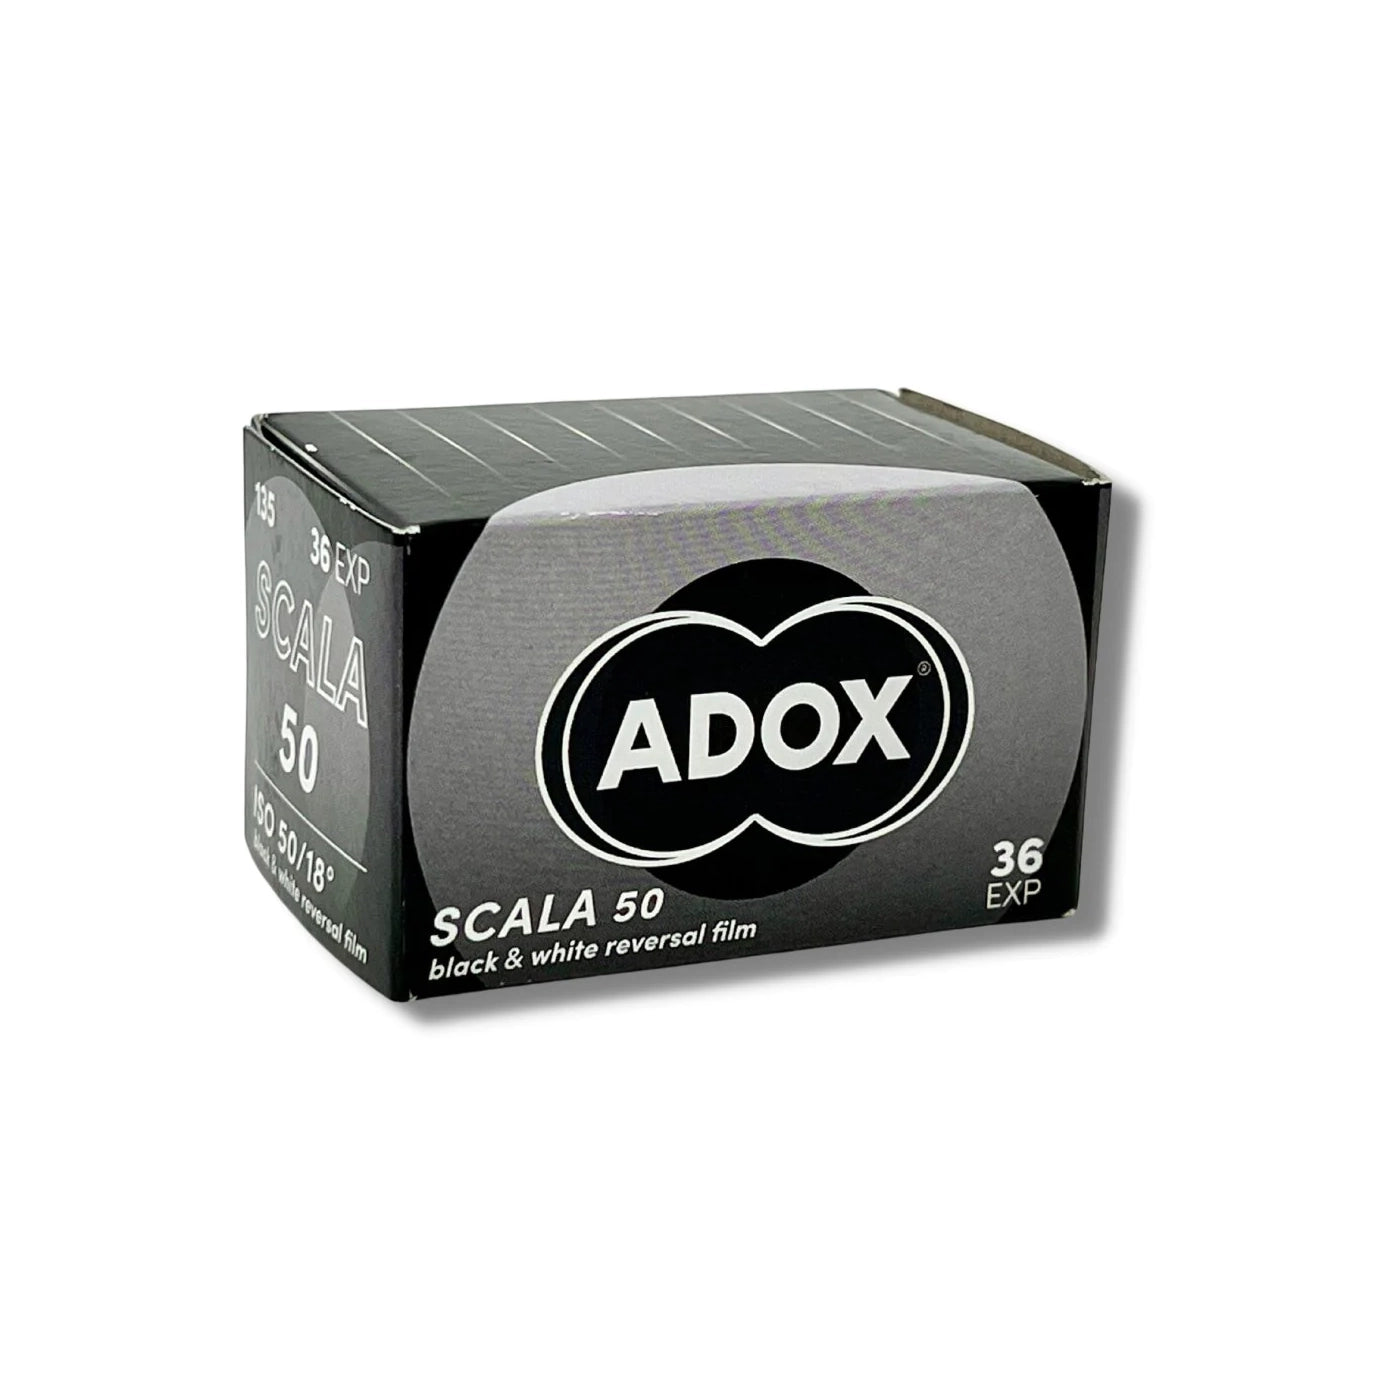 Adox Scala 50-35mm